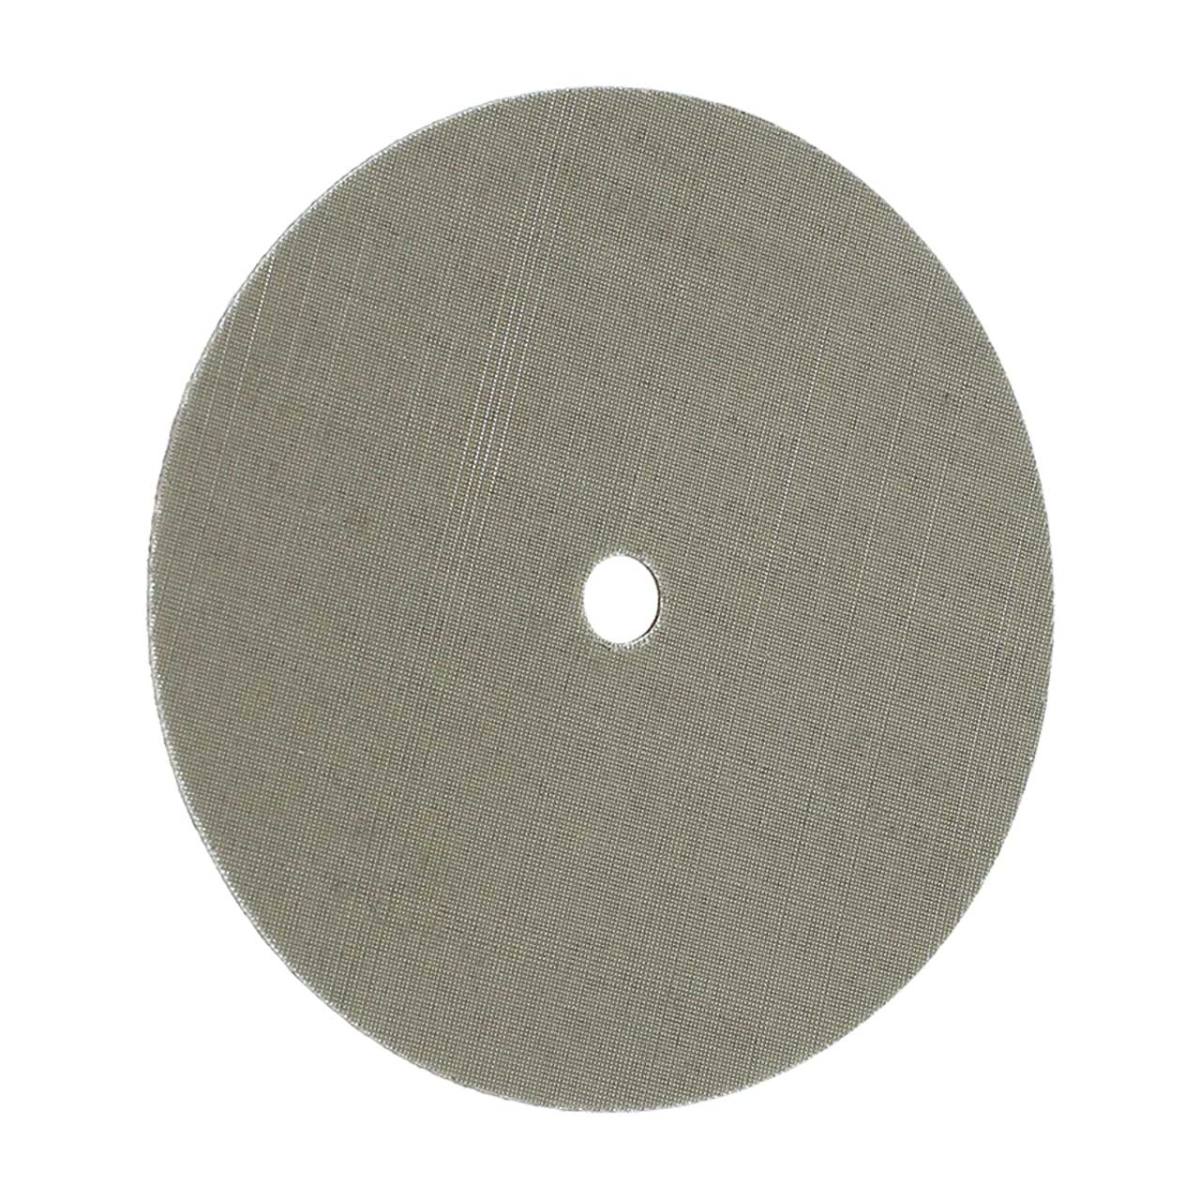 FIX KLETT Trizact disc, 115 mm x 10 mm, grain 2,000 / A 06, hook-and-loop fastener